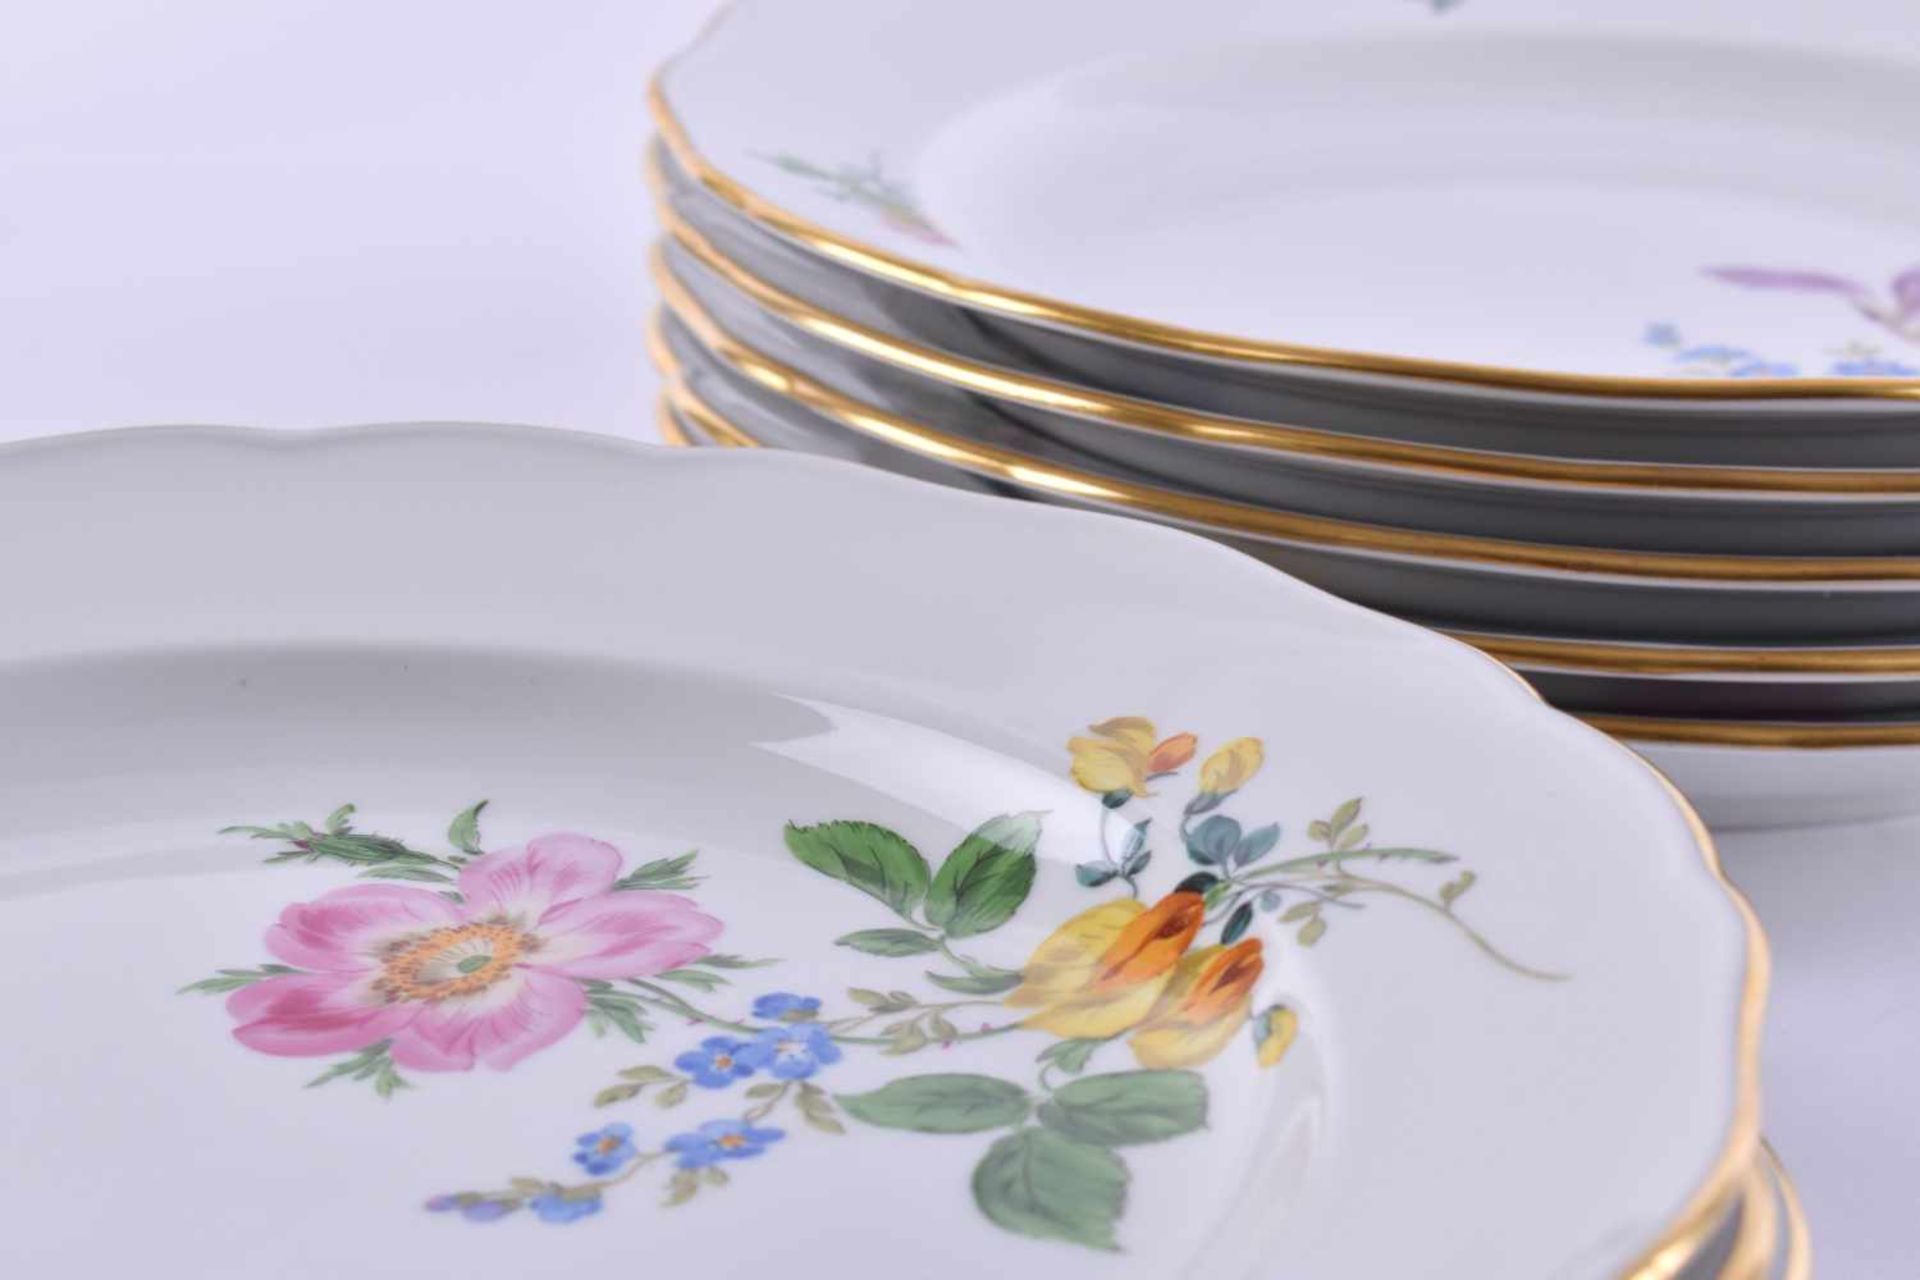 9 dinner plates Meissencolored and gold painted, decor with German flower bouquet, blue sword - Bild 3 aus 4